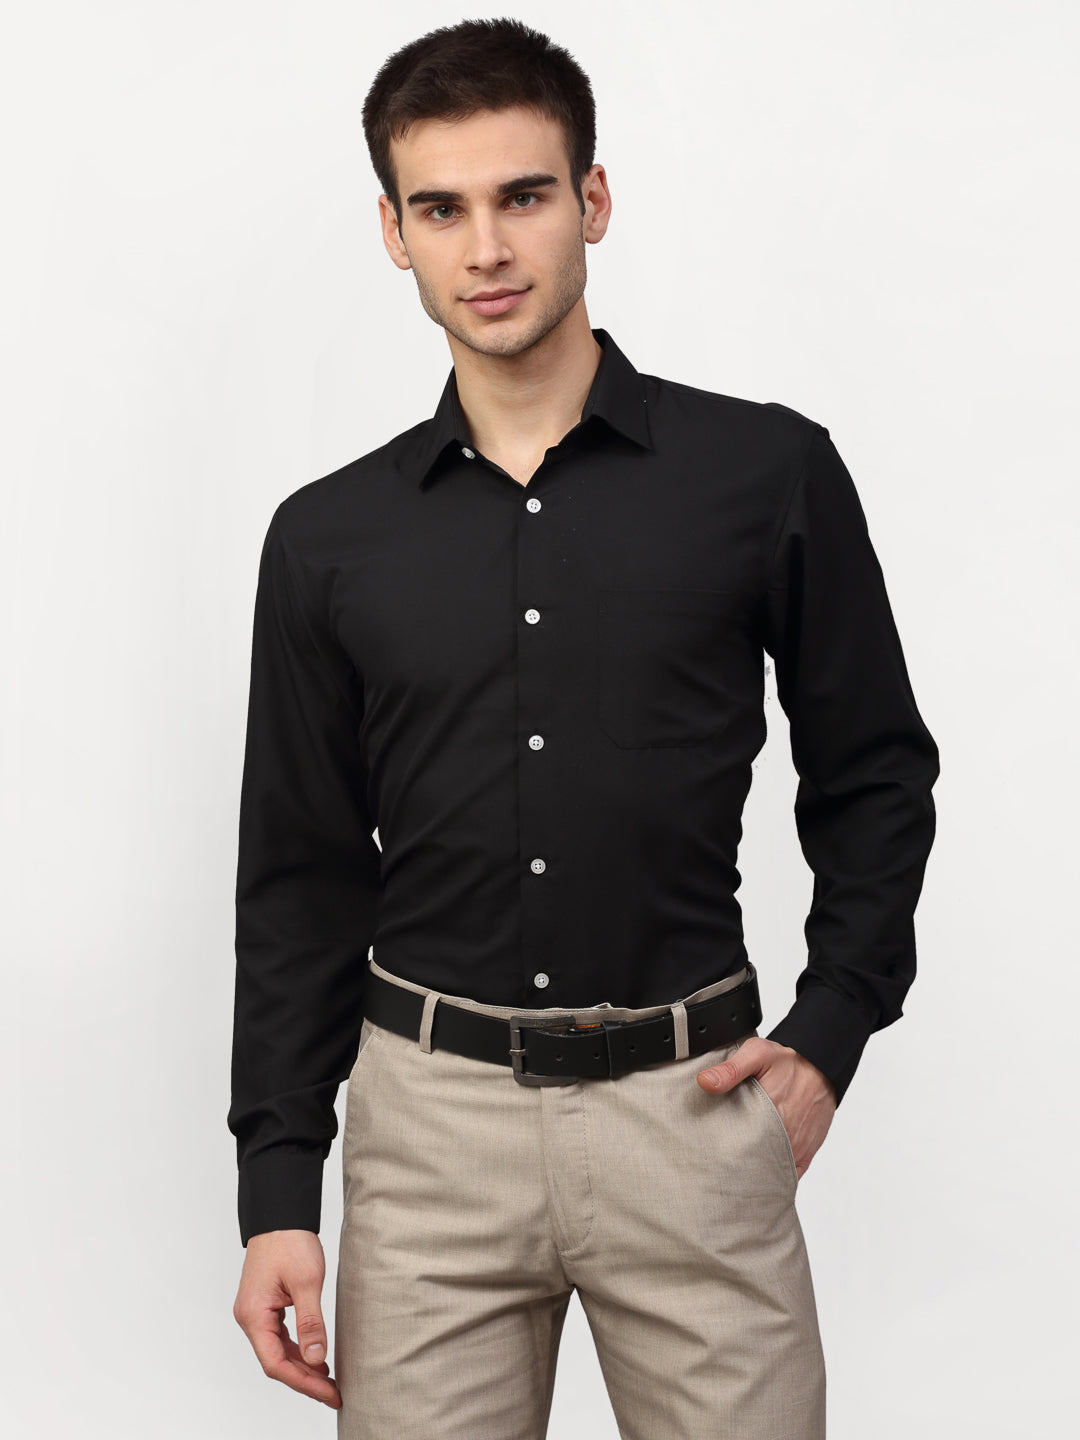 Men's Black Solid Formal Shirts ( SF 777Black ) - Jainish